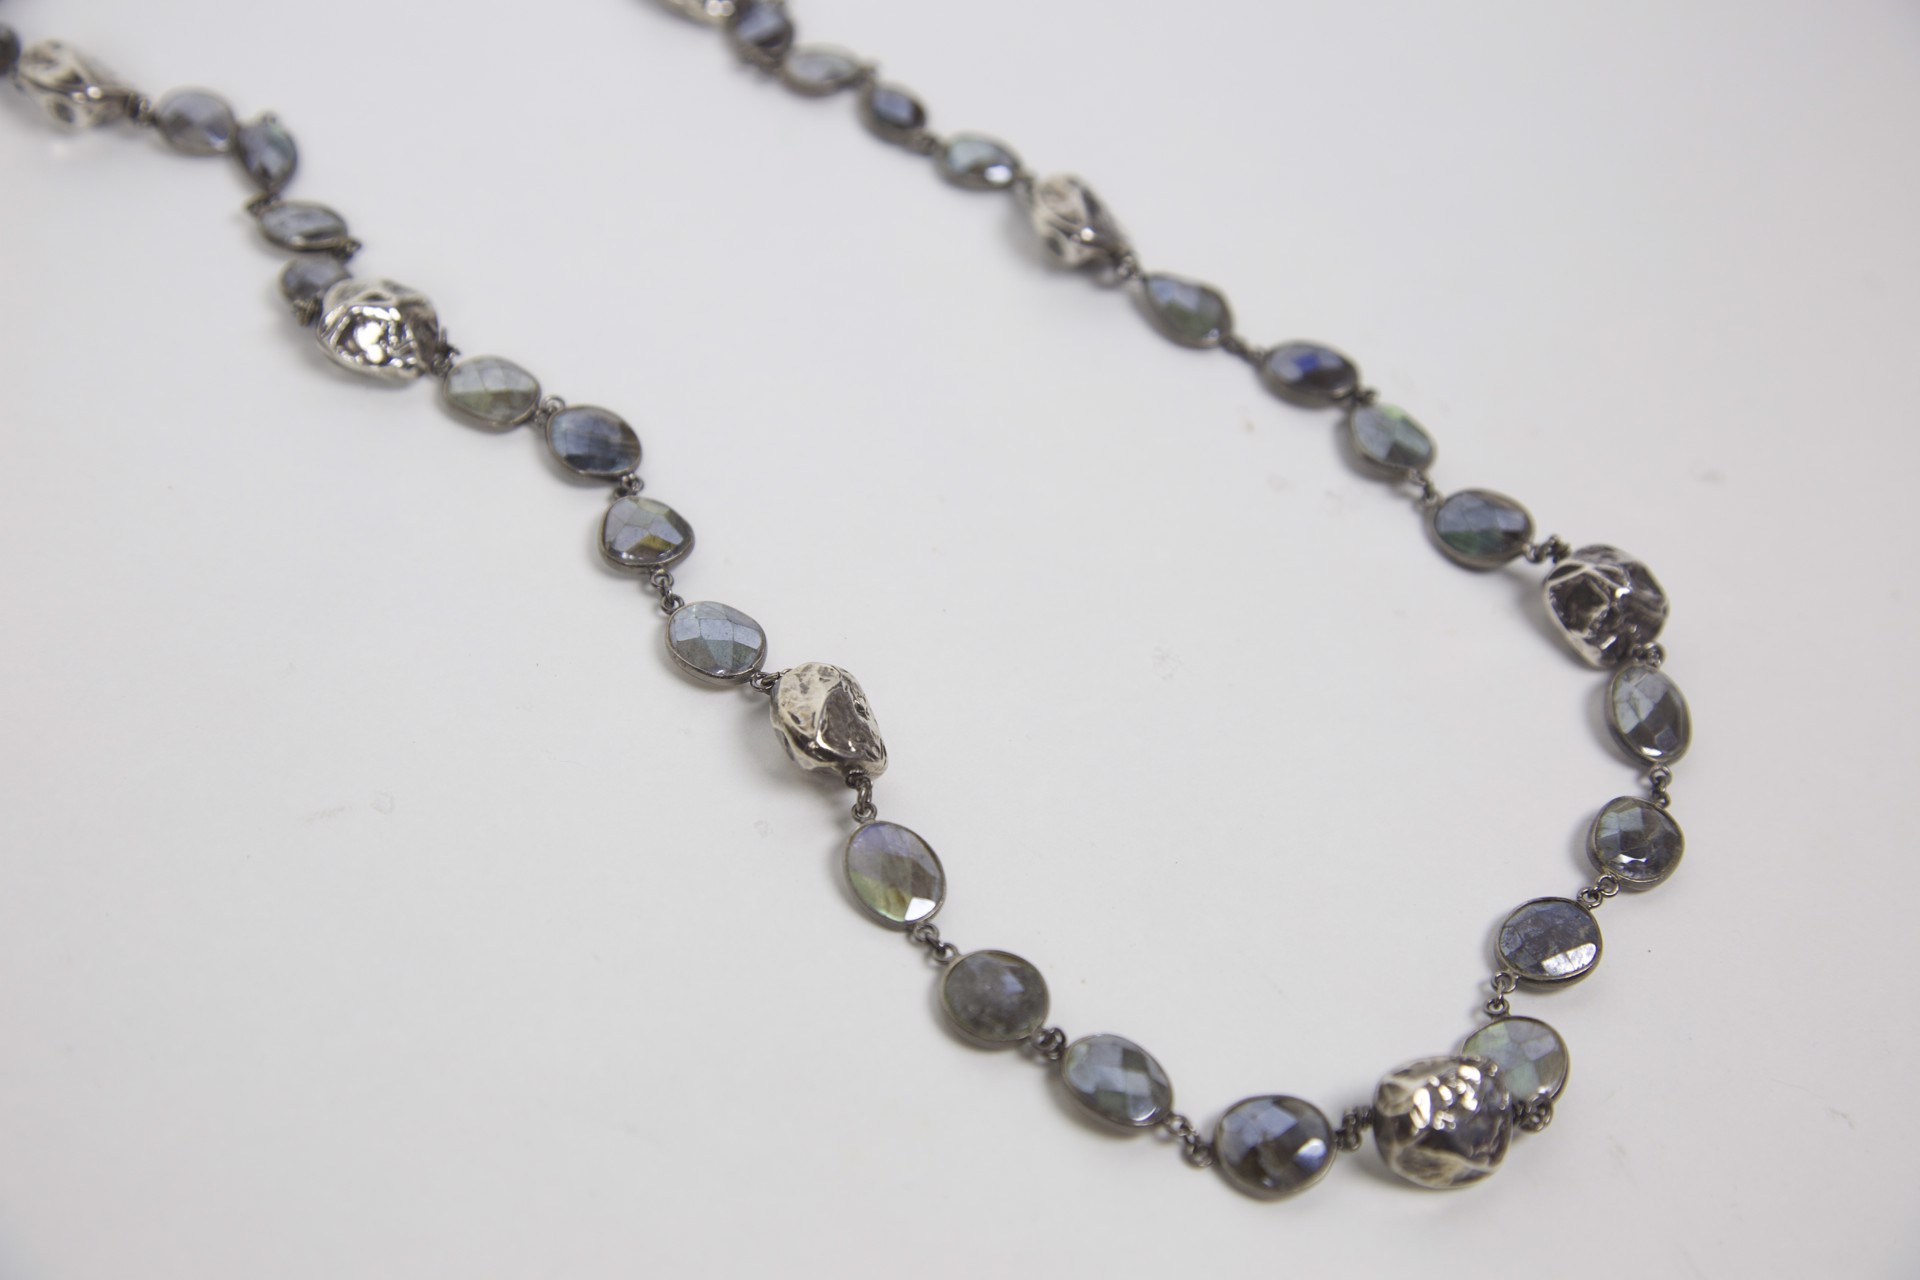 Labradorite and silver nugget necklace by Jeri Mitrani